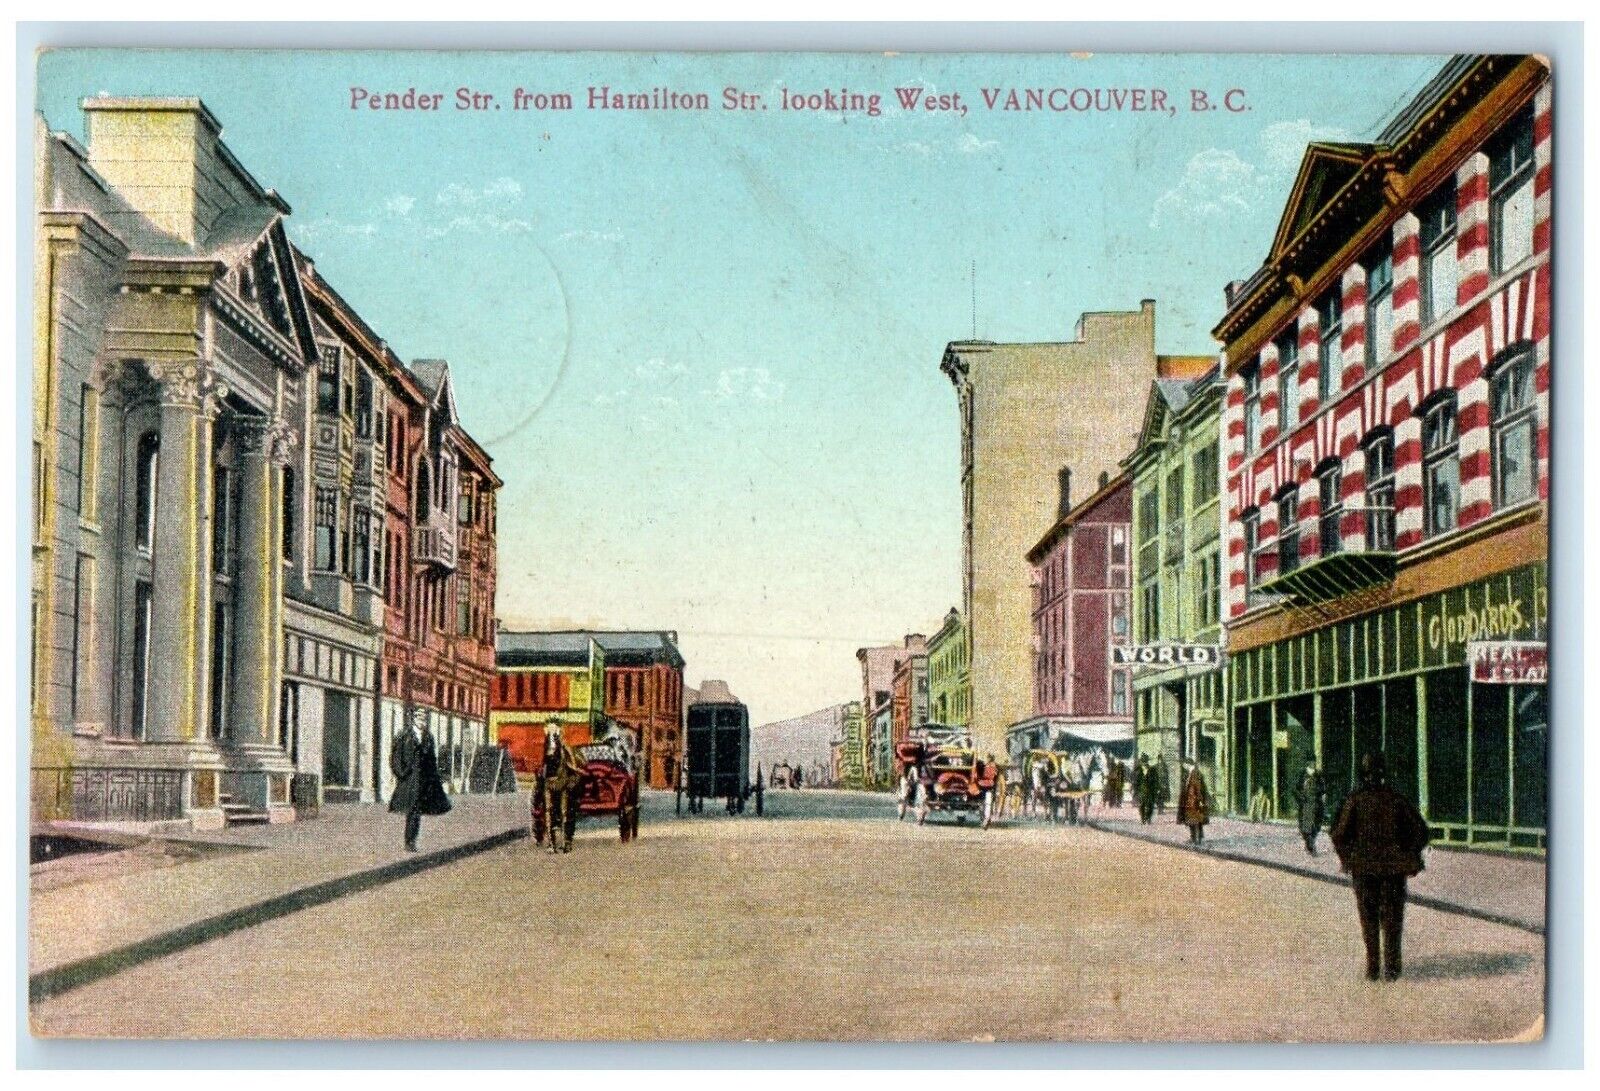 1912 Pender Street From Hamilton Str. Vancouver British Columbia Canada Postcard